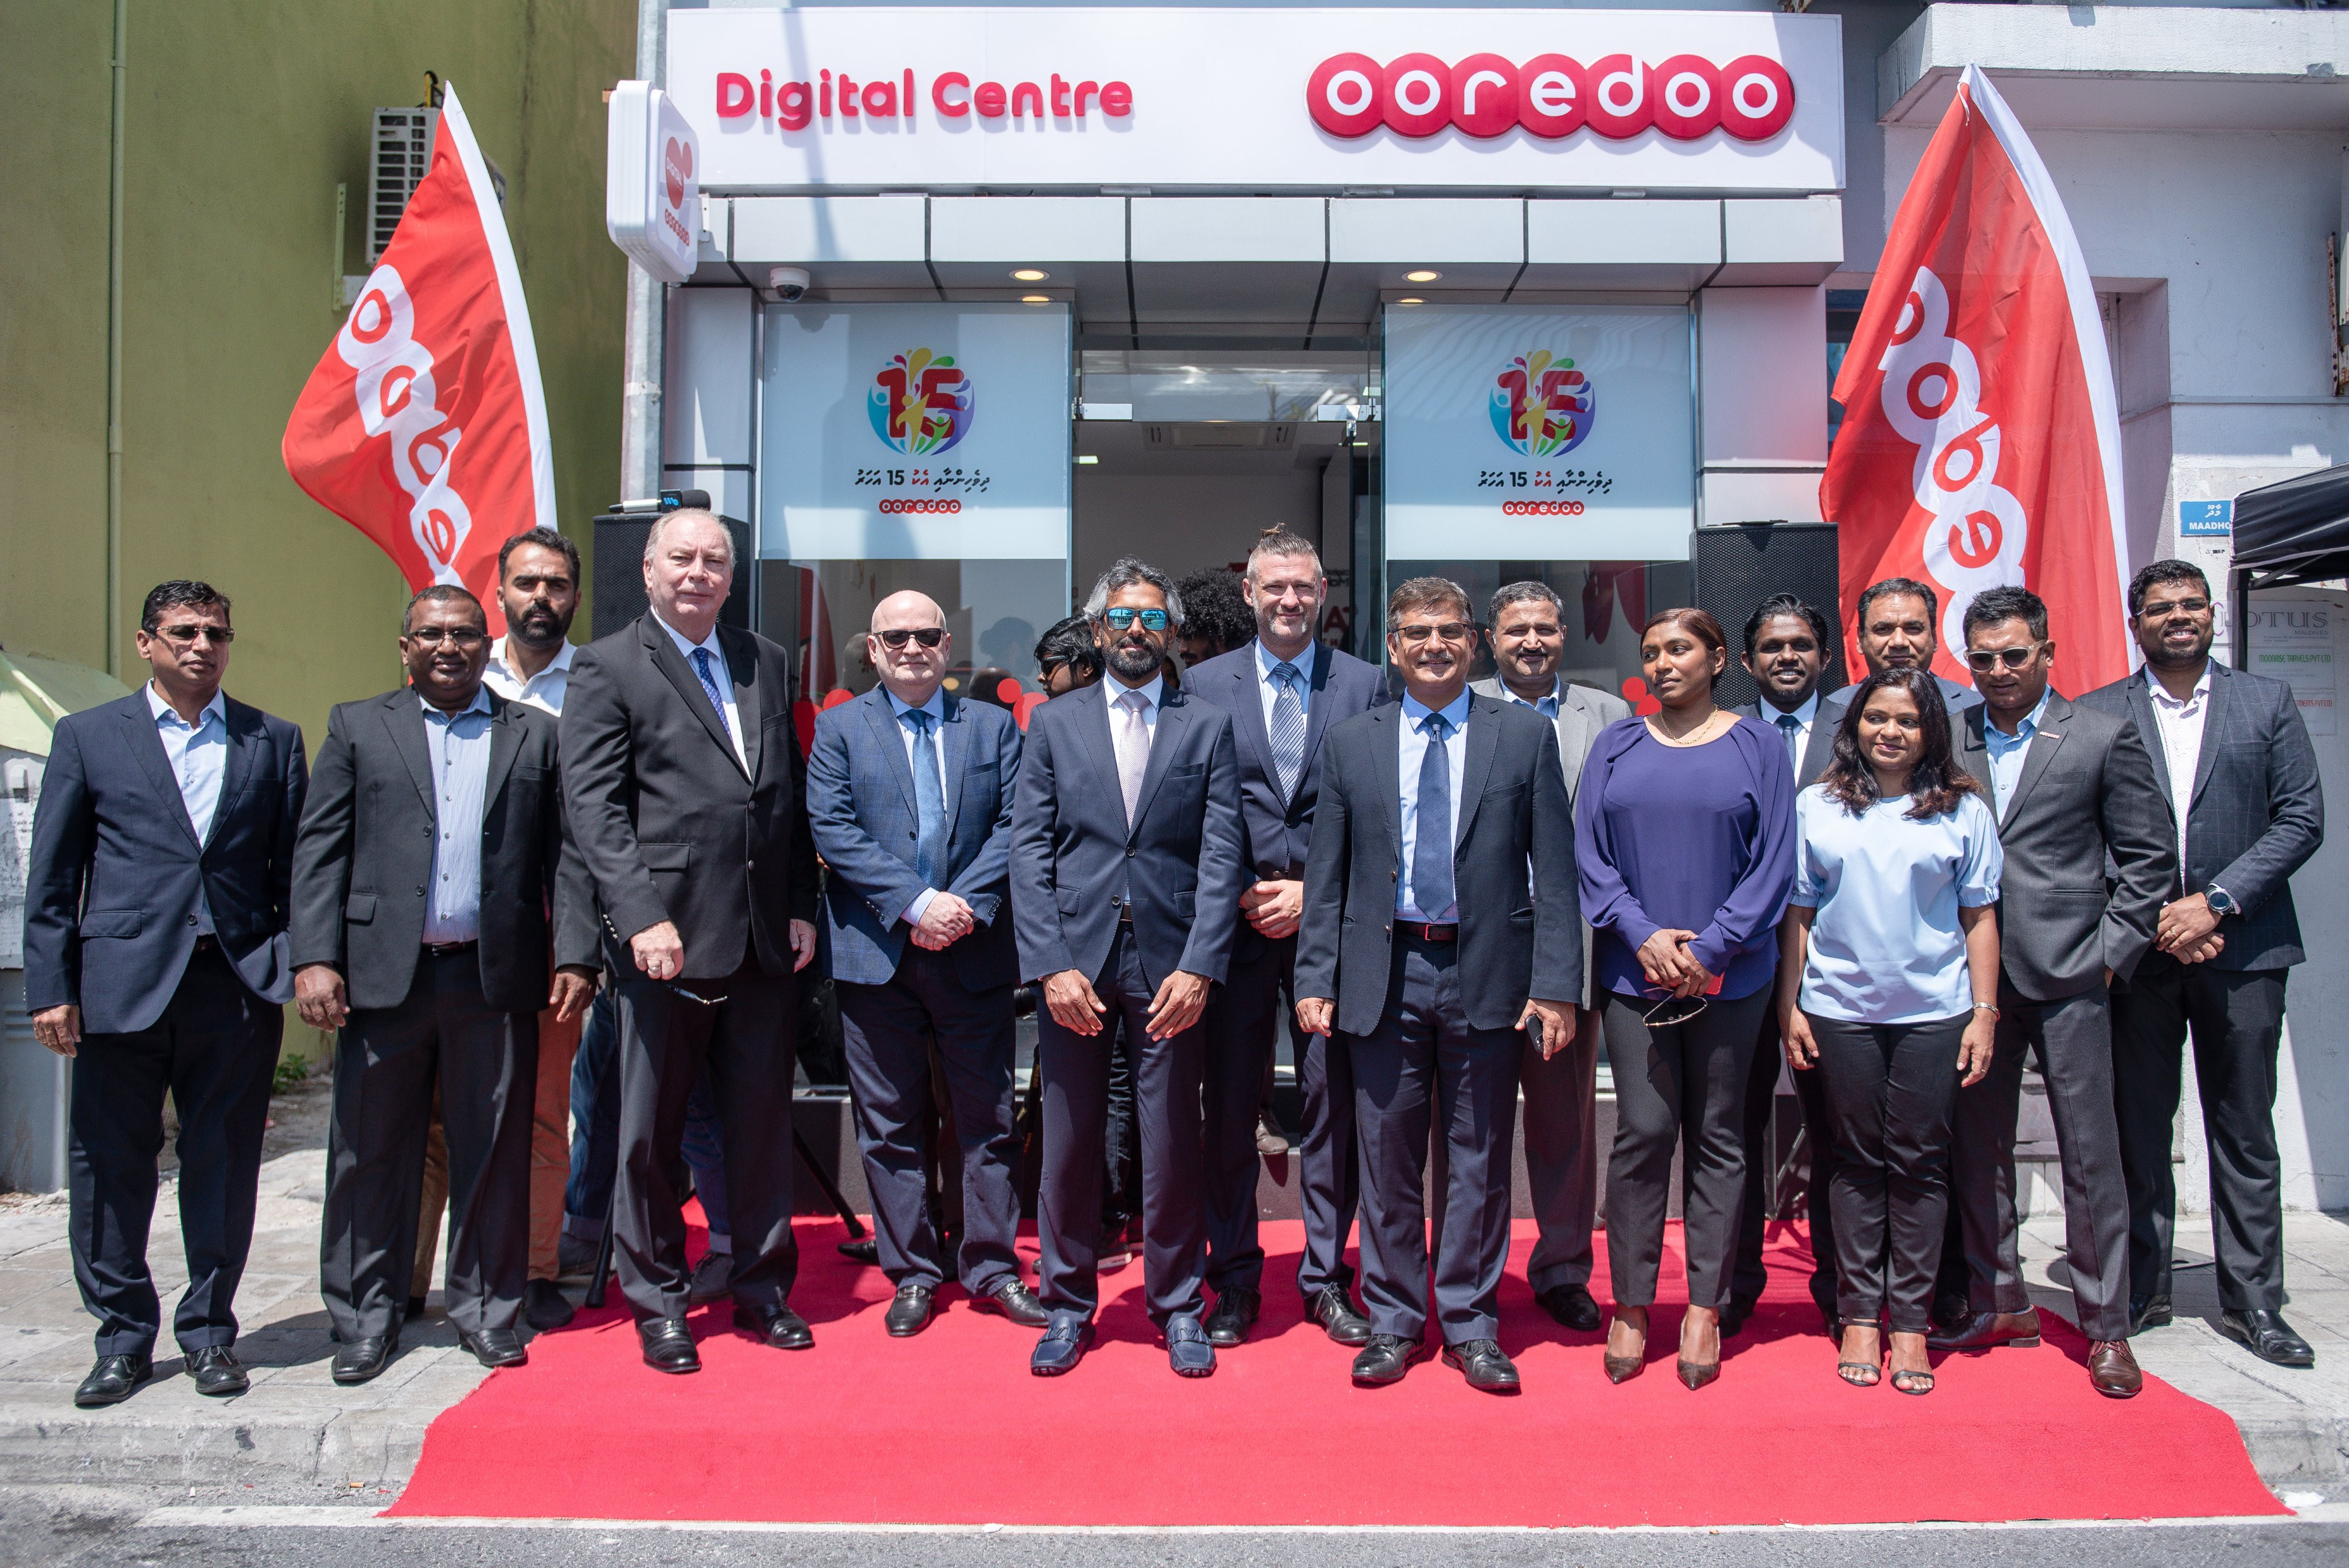 Ooredoo Maldives Launches Digital Centre